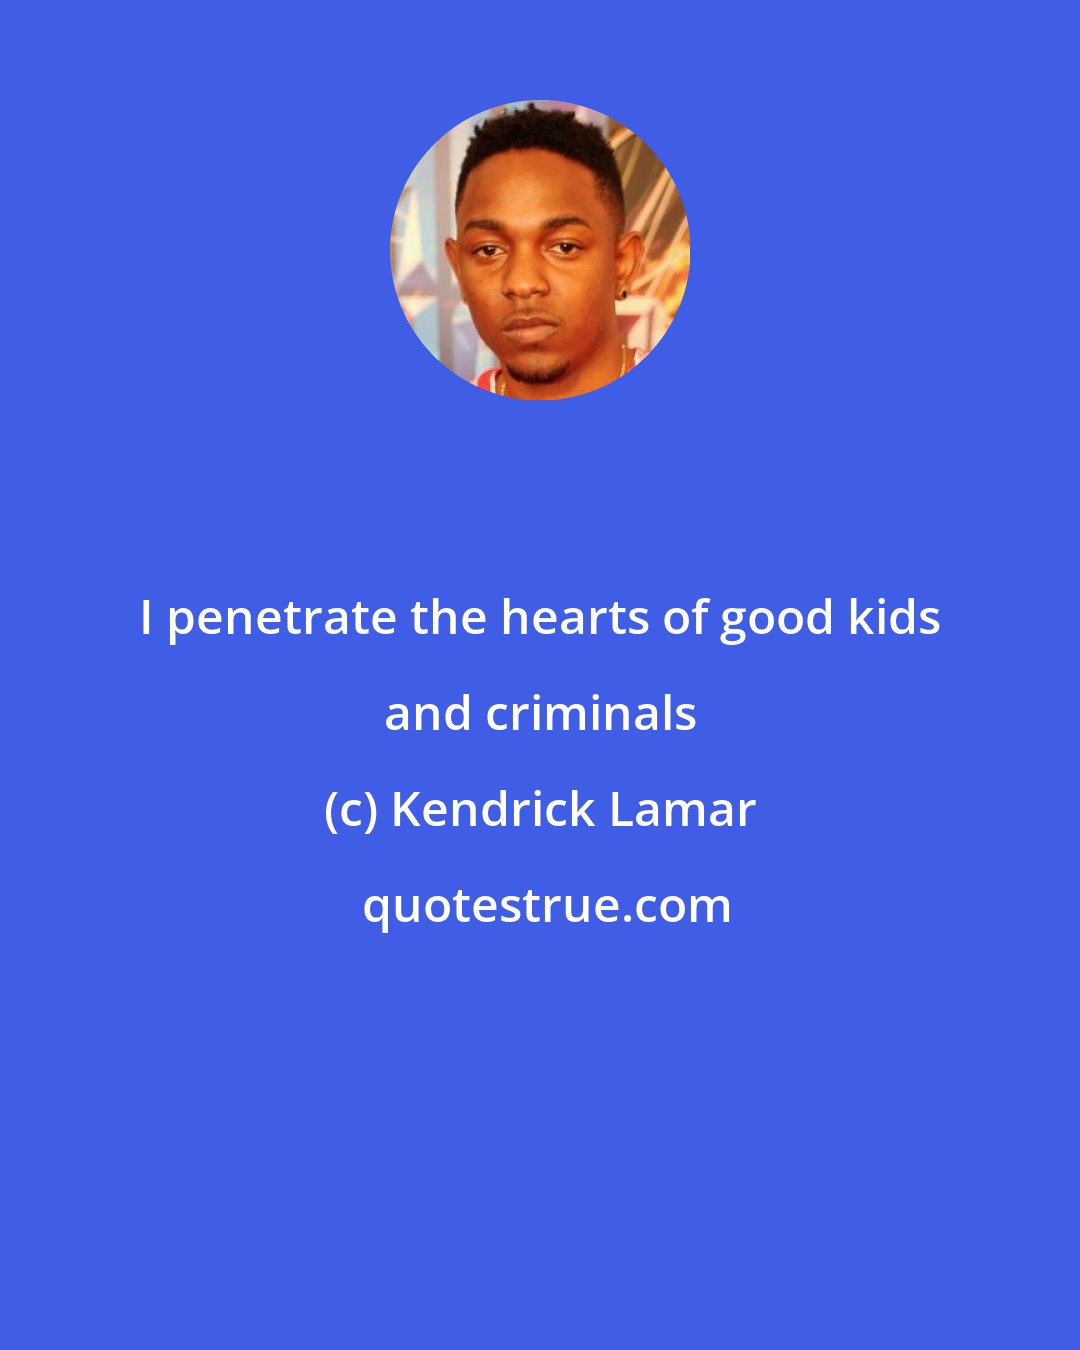 Kendrick Lamar: I penetrate the hearts of good kids and criminals